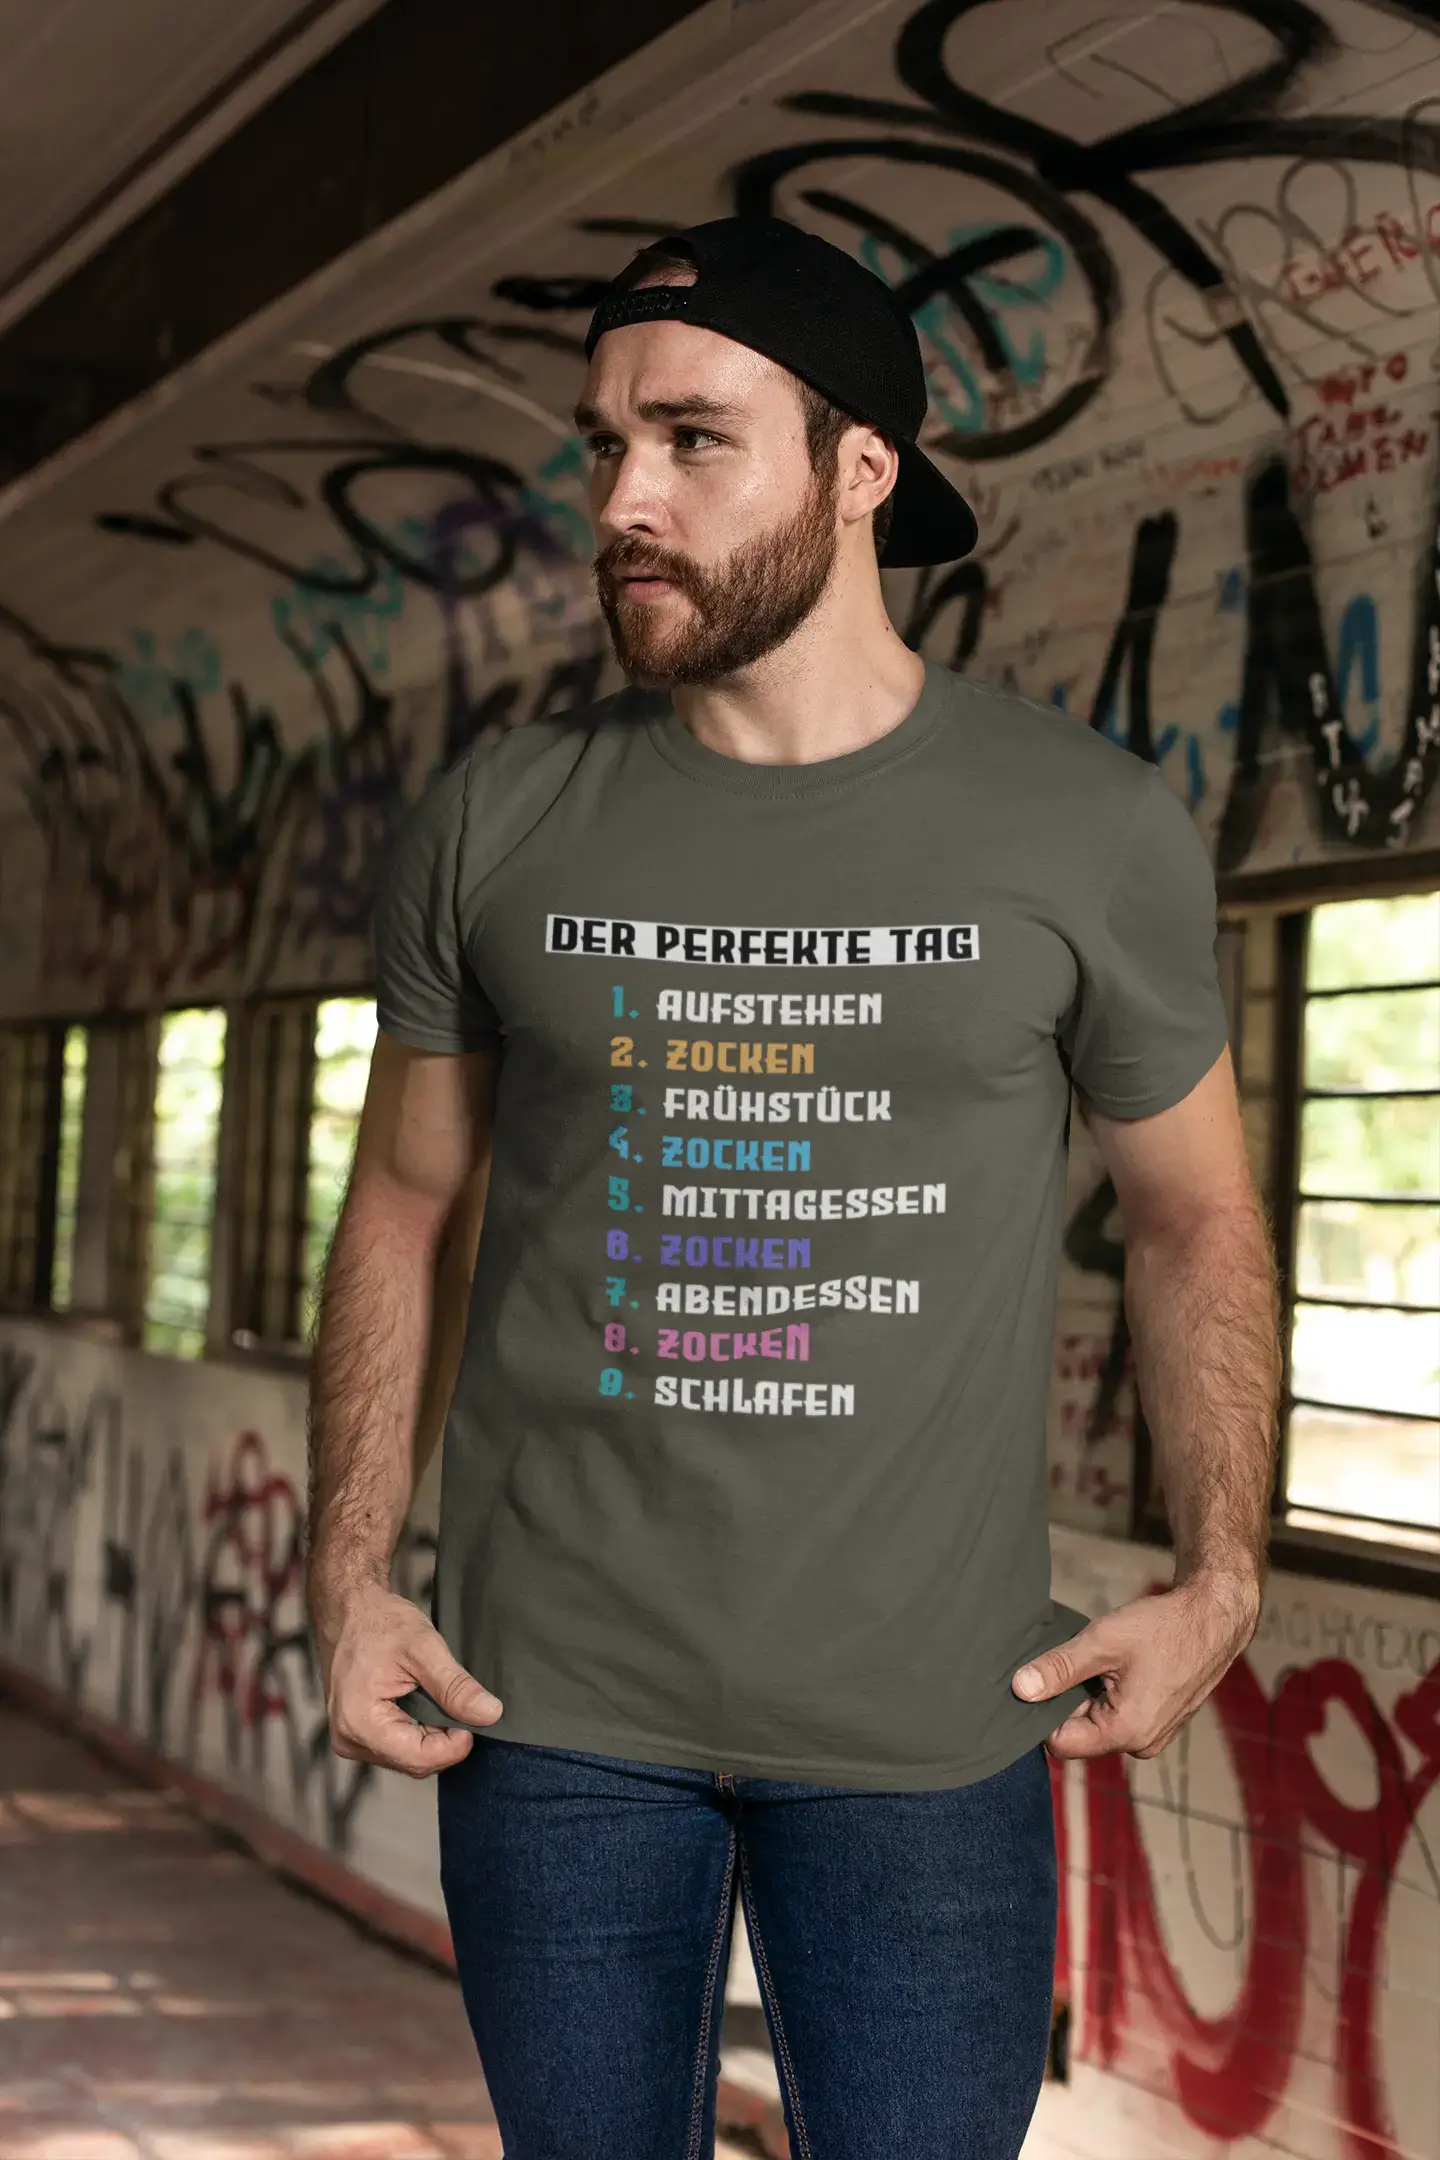 Men’s Graphic T-Shirt Der Perfekte Tag Lustige Zocker Gamer Gaming Military Green Gift Idea